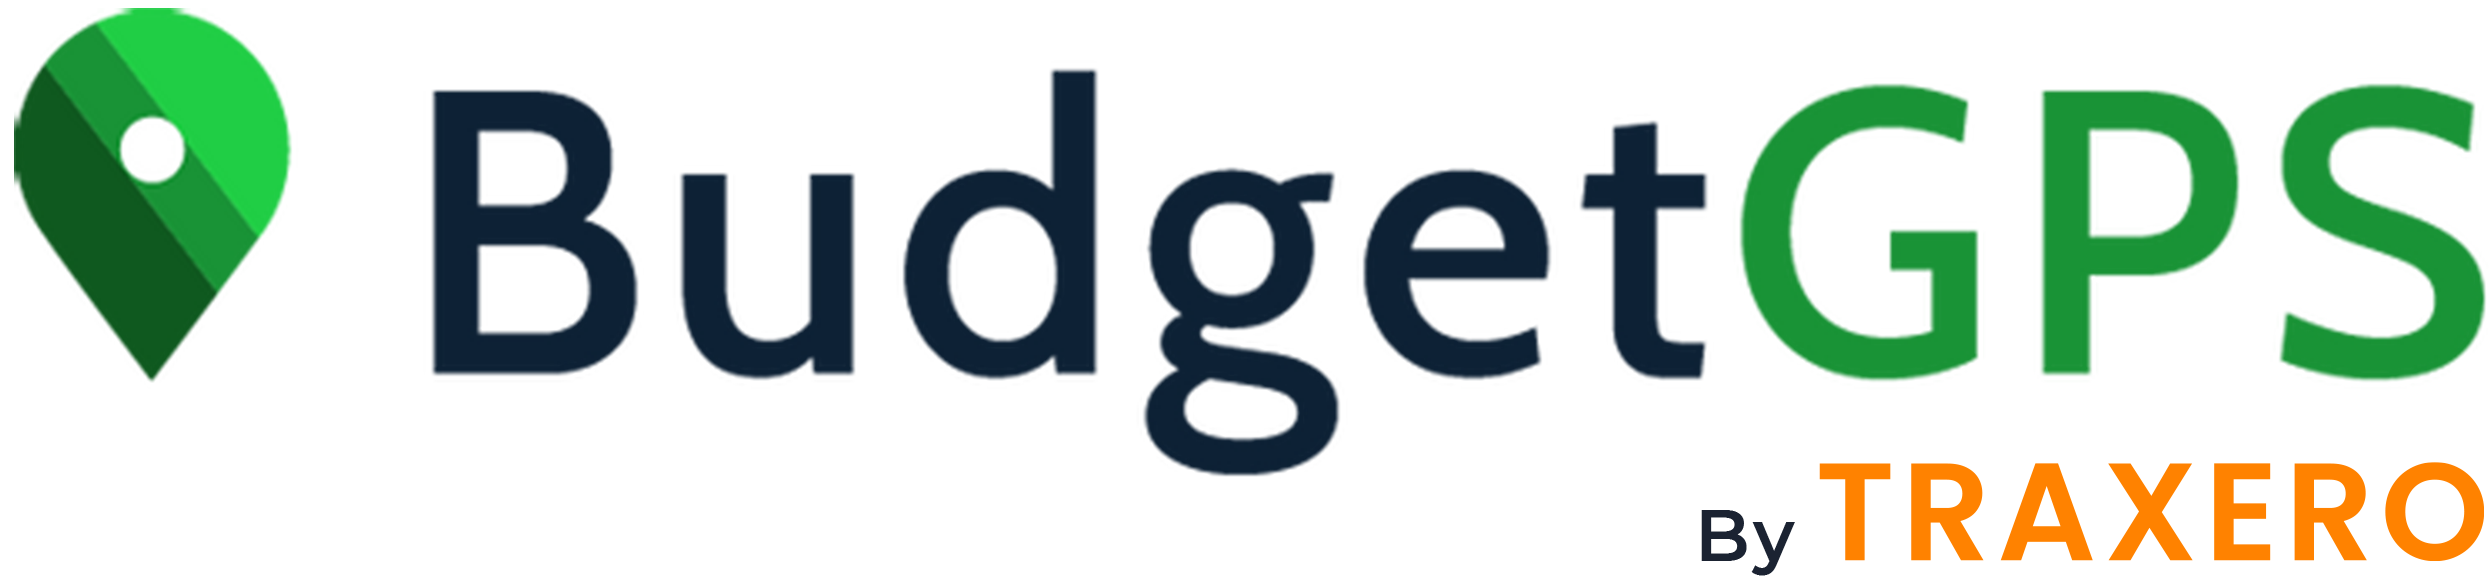 BudgetGPS Logo